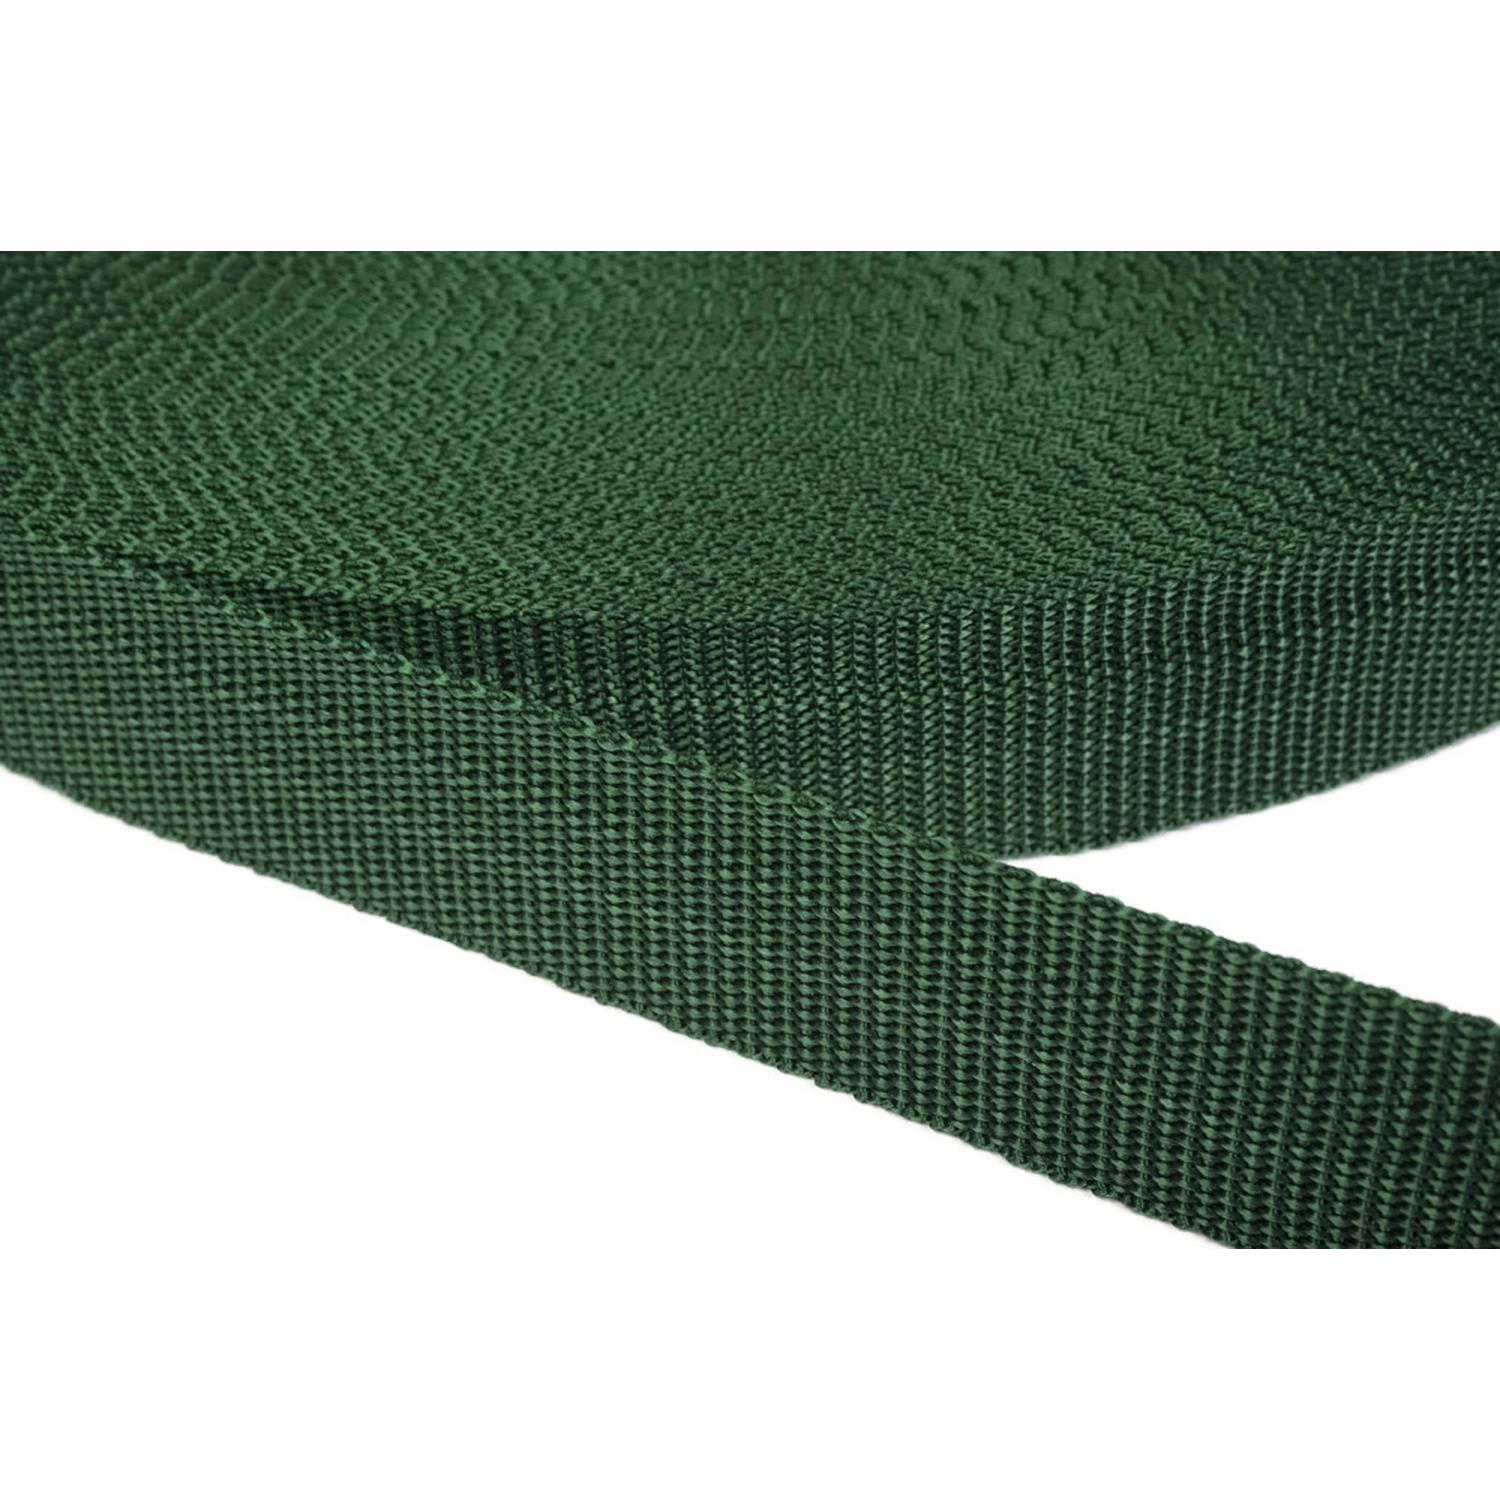 Gurtband 40mm breit aus Polypropylen in 41 Farben 35 - dunkelgrün 6 Meter